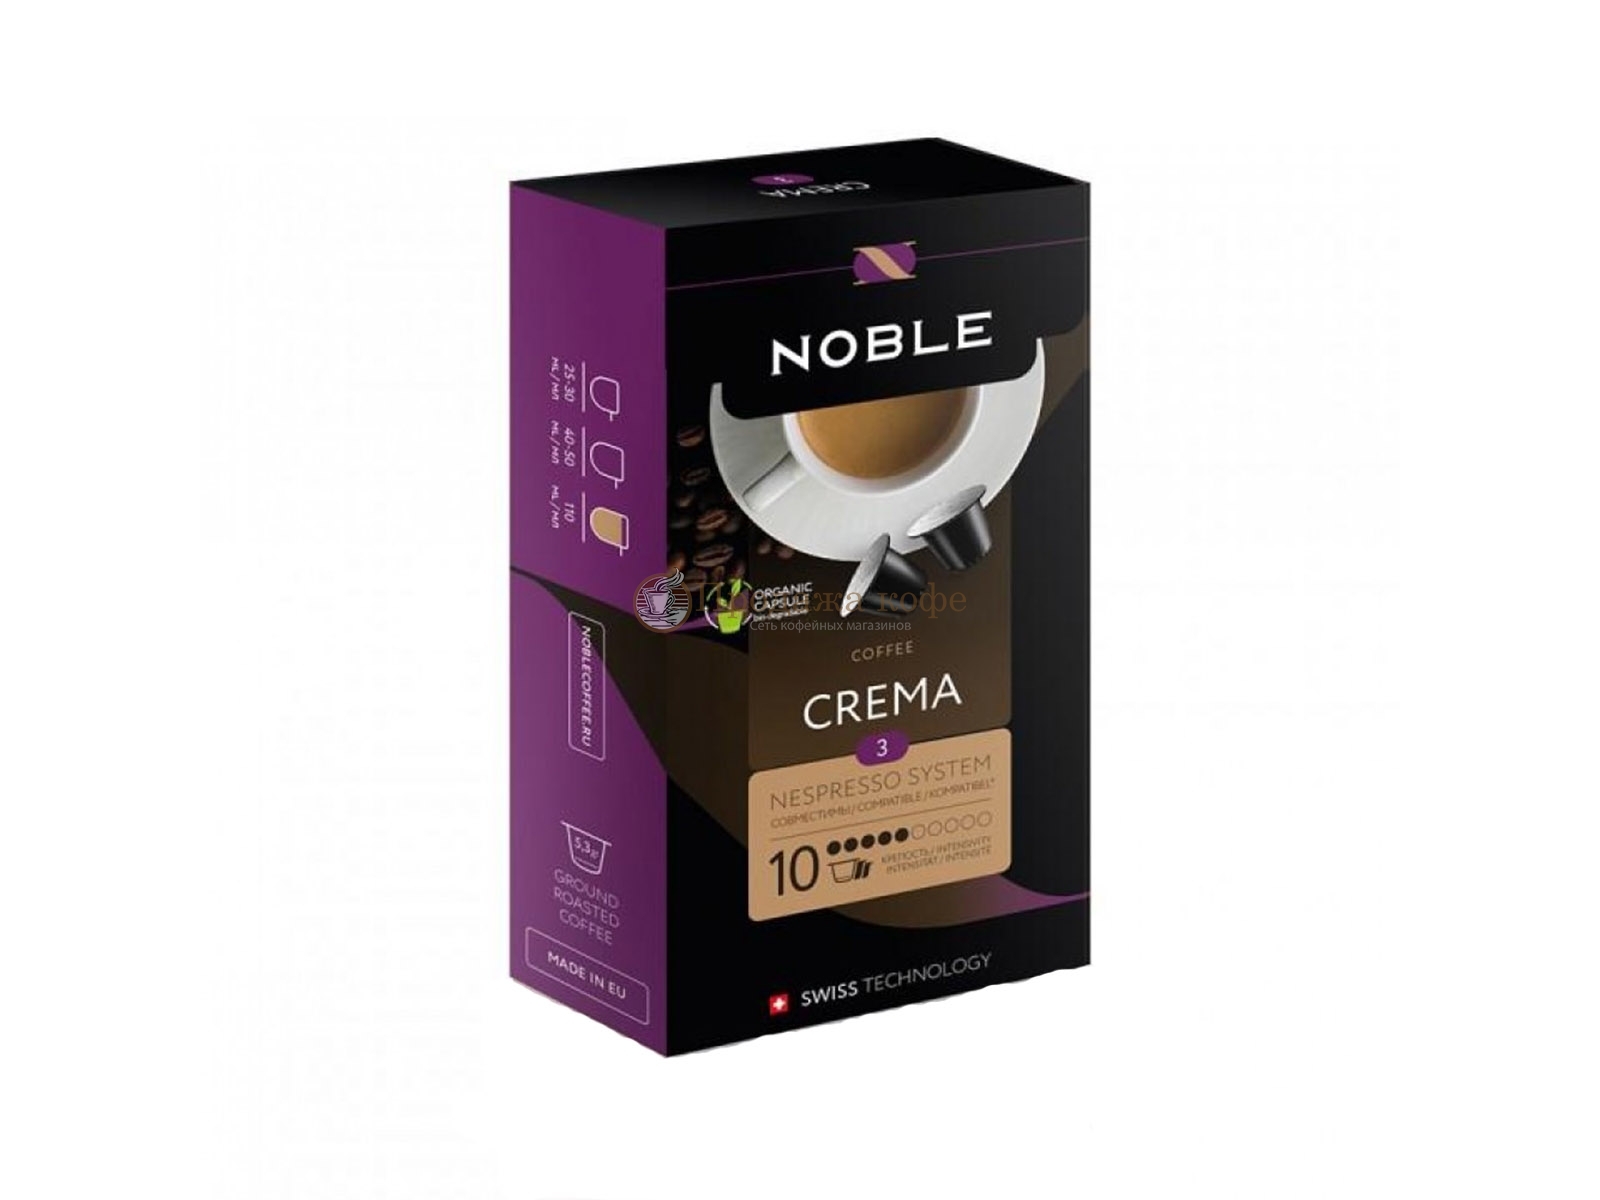 Кофе в капсулах Noble Crema (Нобле Крема), упаковка 10 капсул, формат Nespresso (Неспрессо)